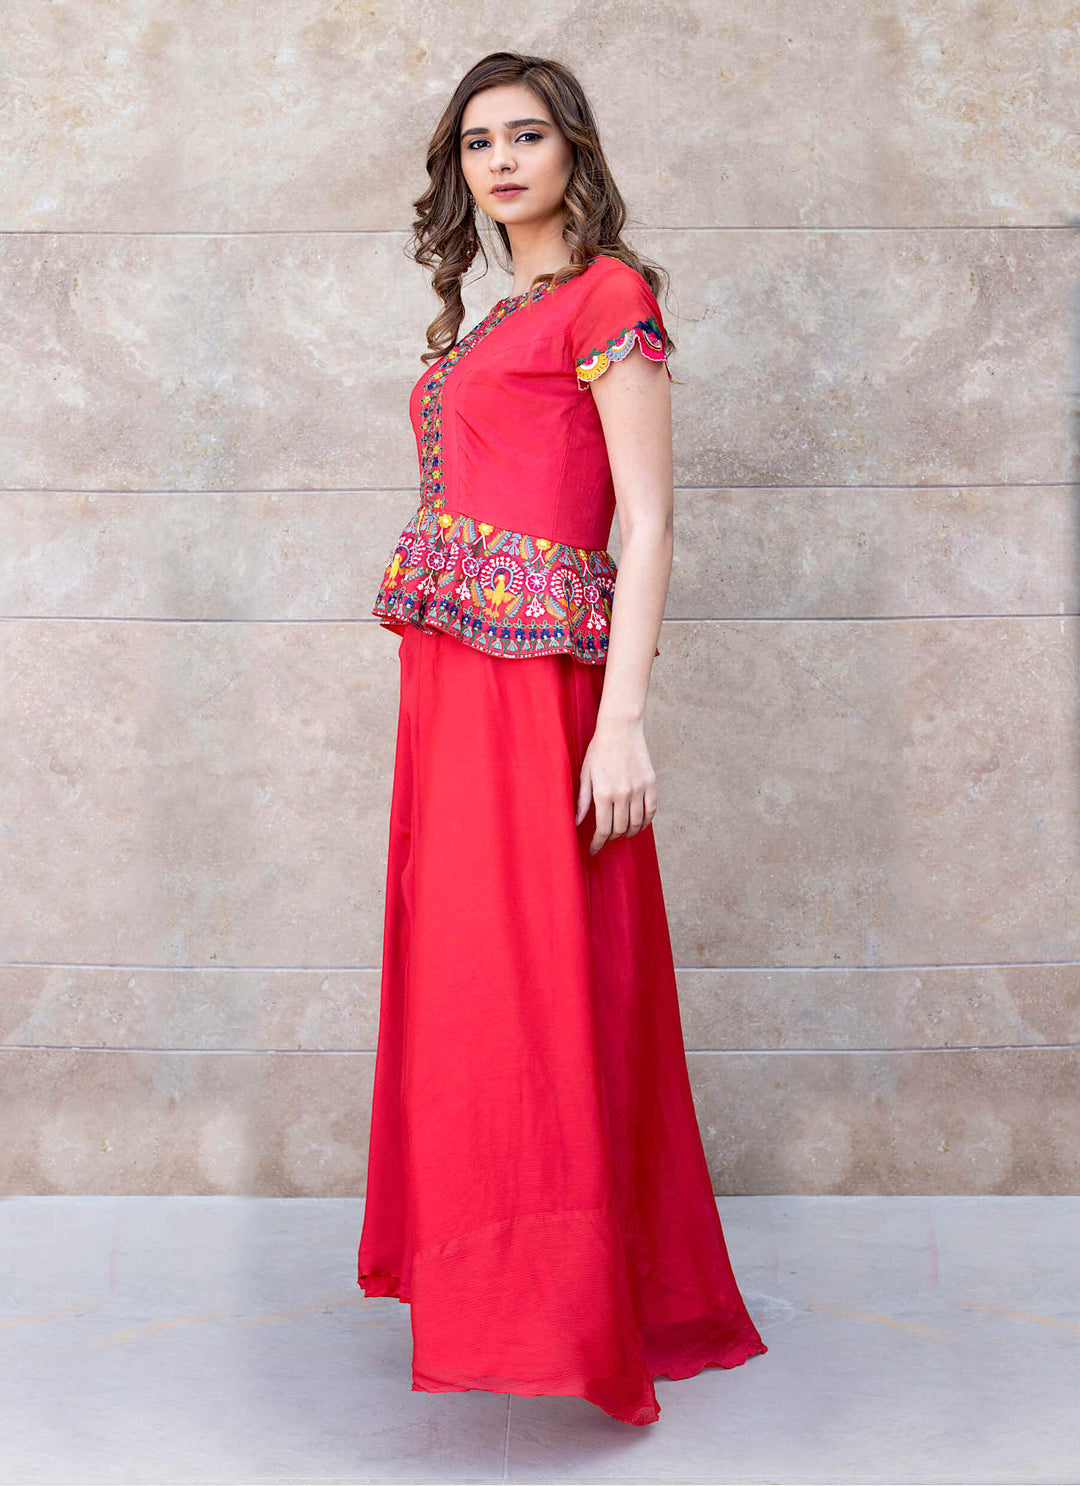 Red Ethnic Peplum Dress Right